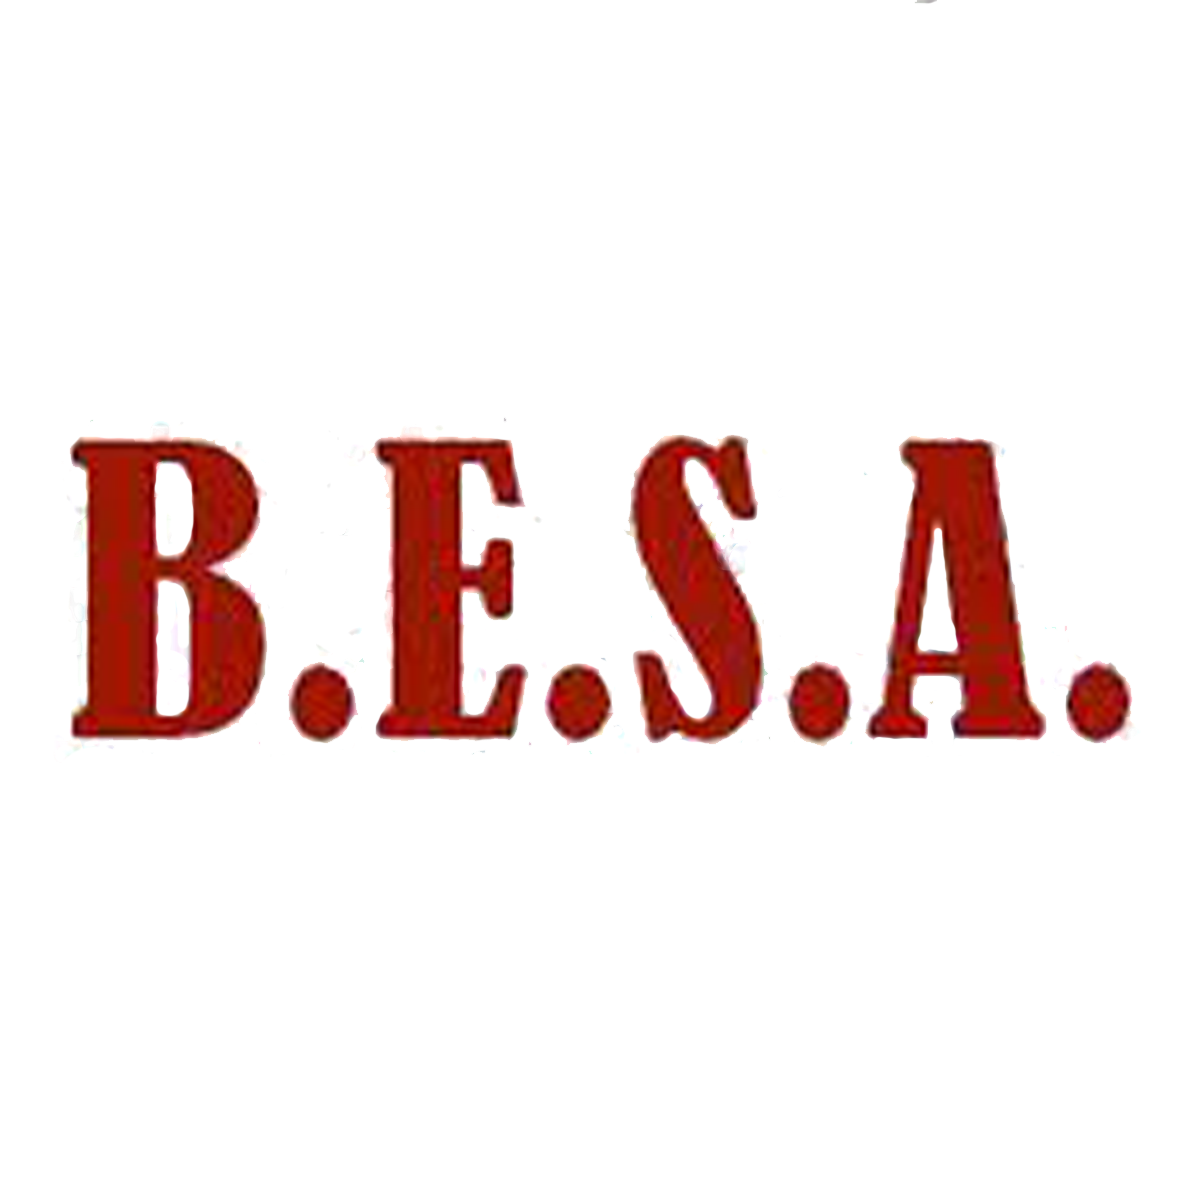 Biomedical Engineering Student Affairs (BESA) 